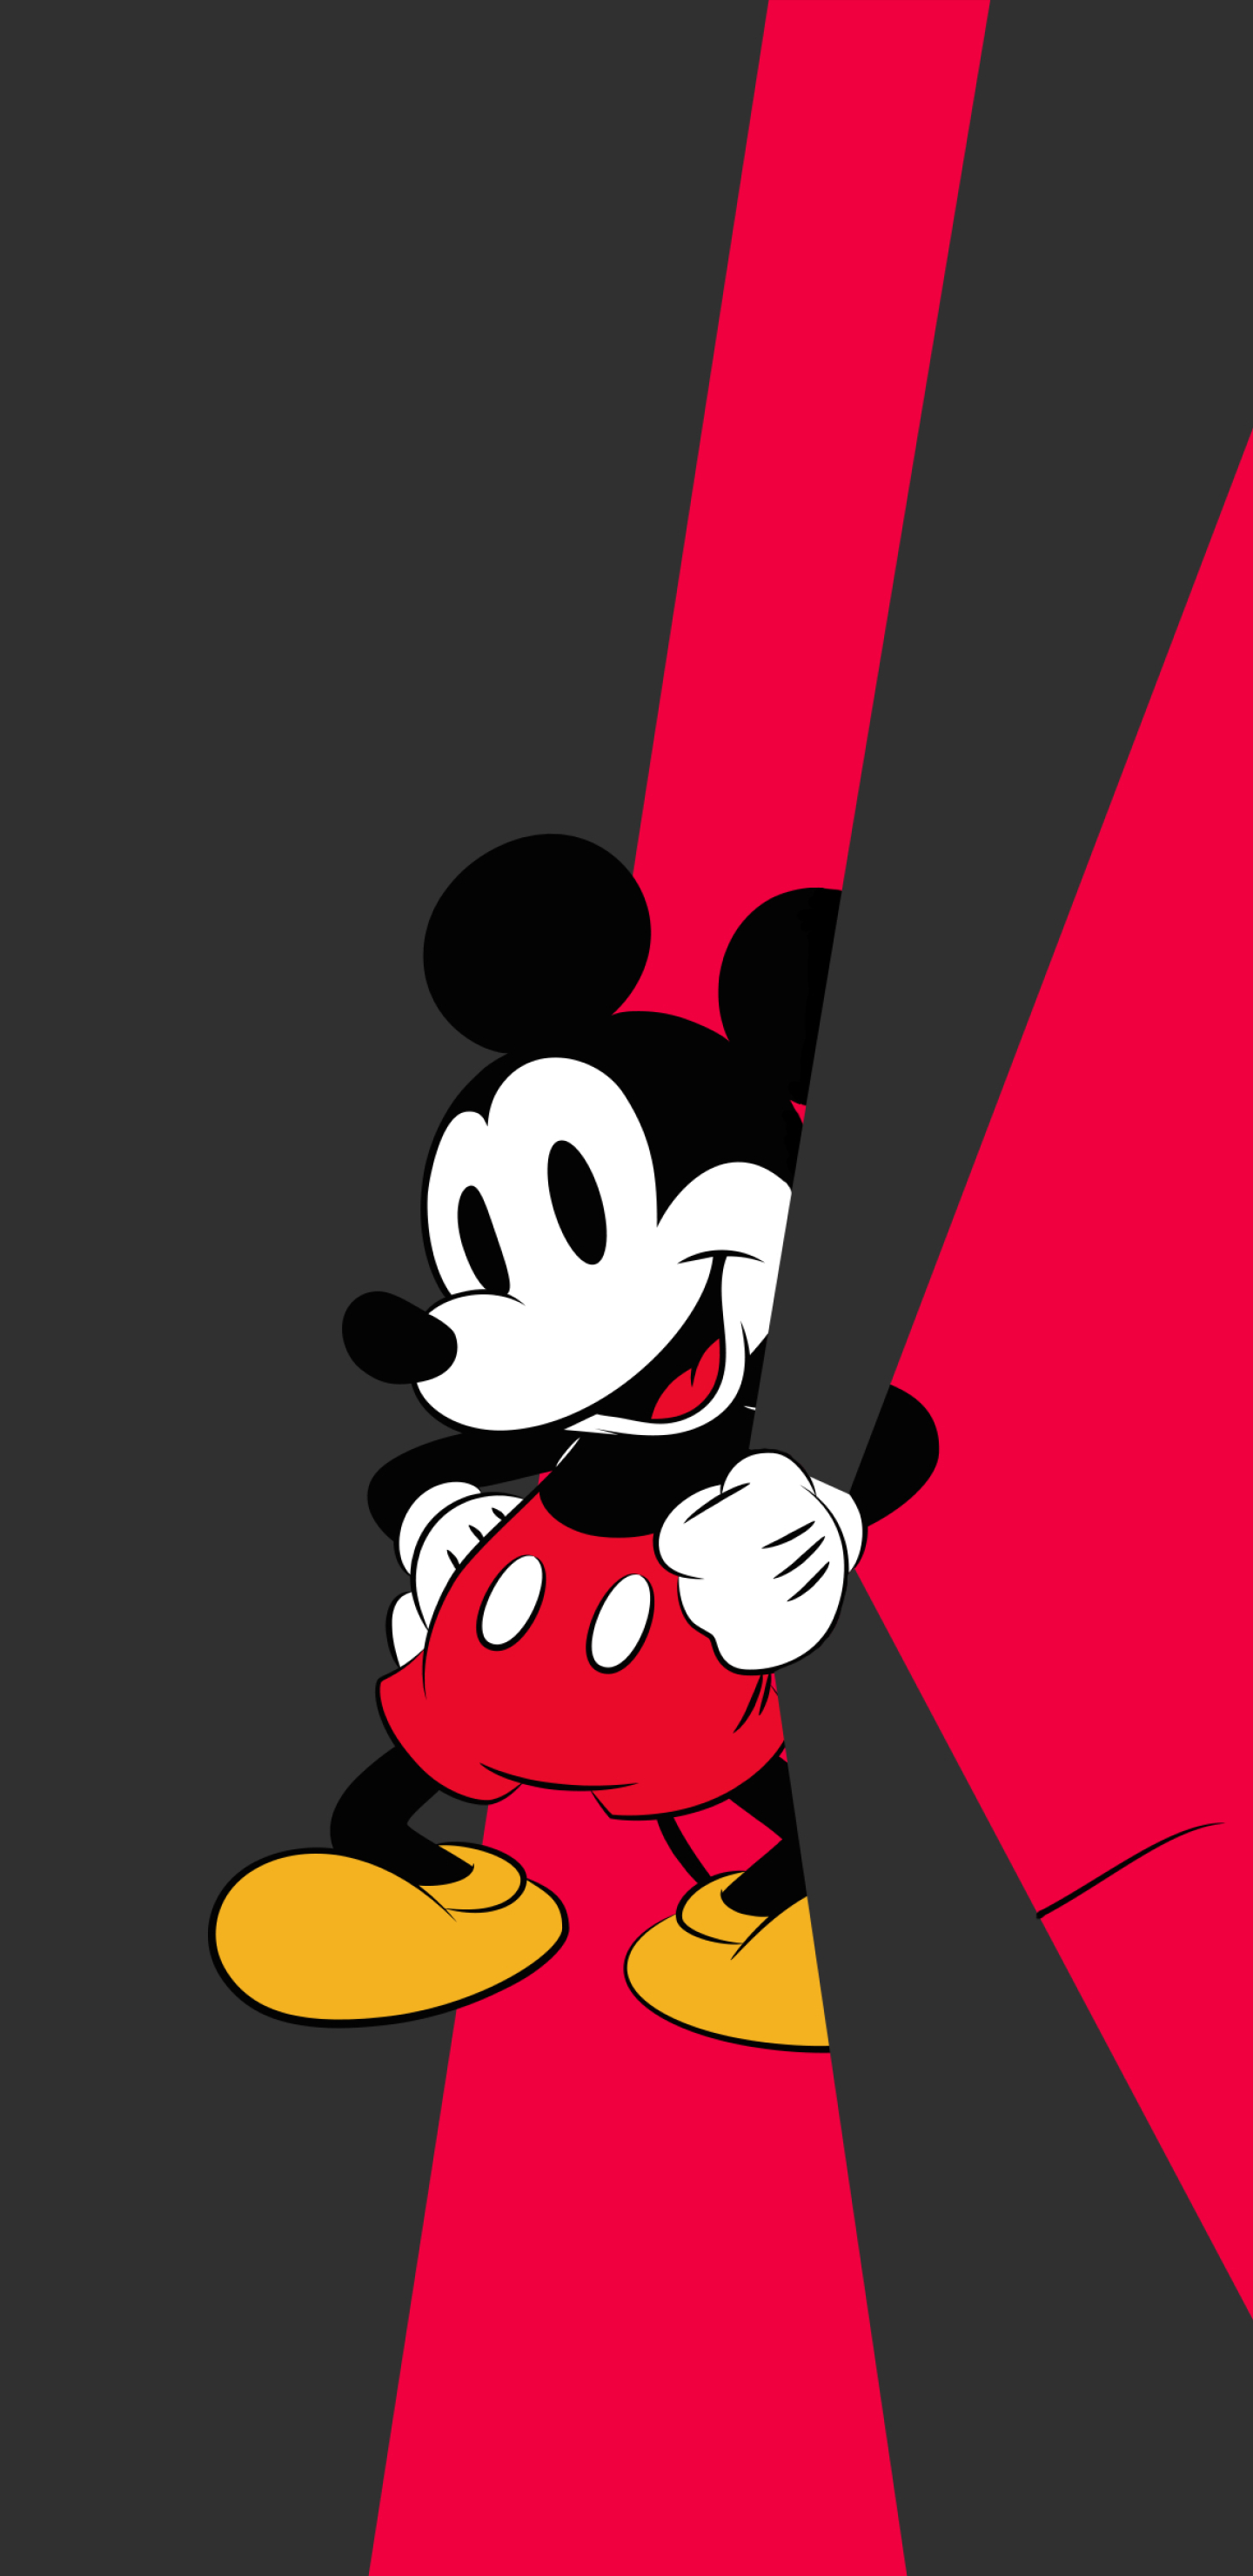 Mickey wallpaper hd